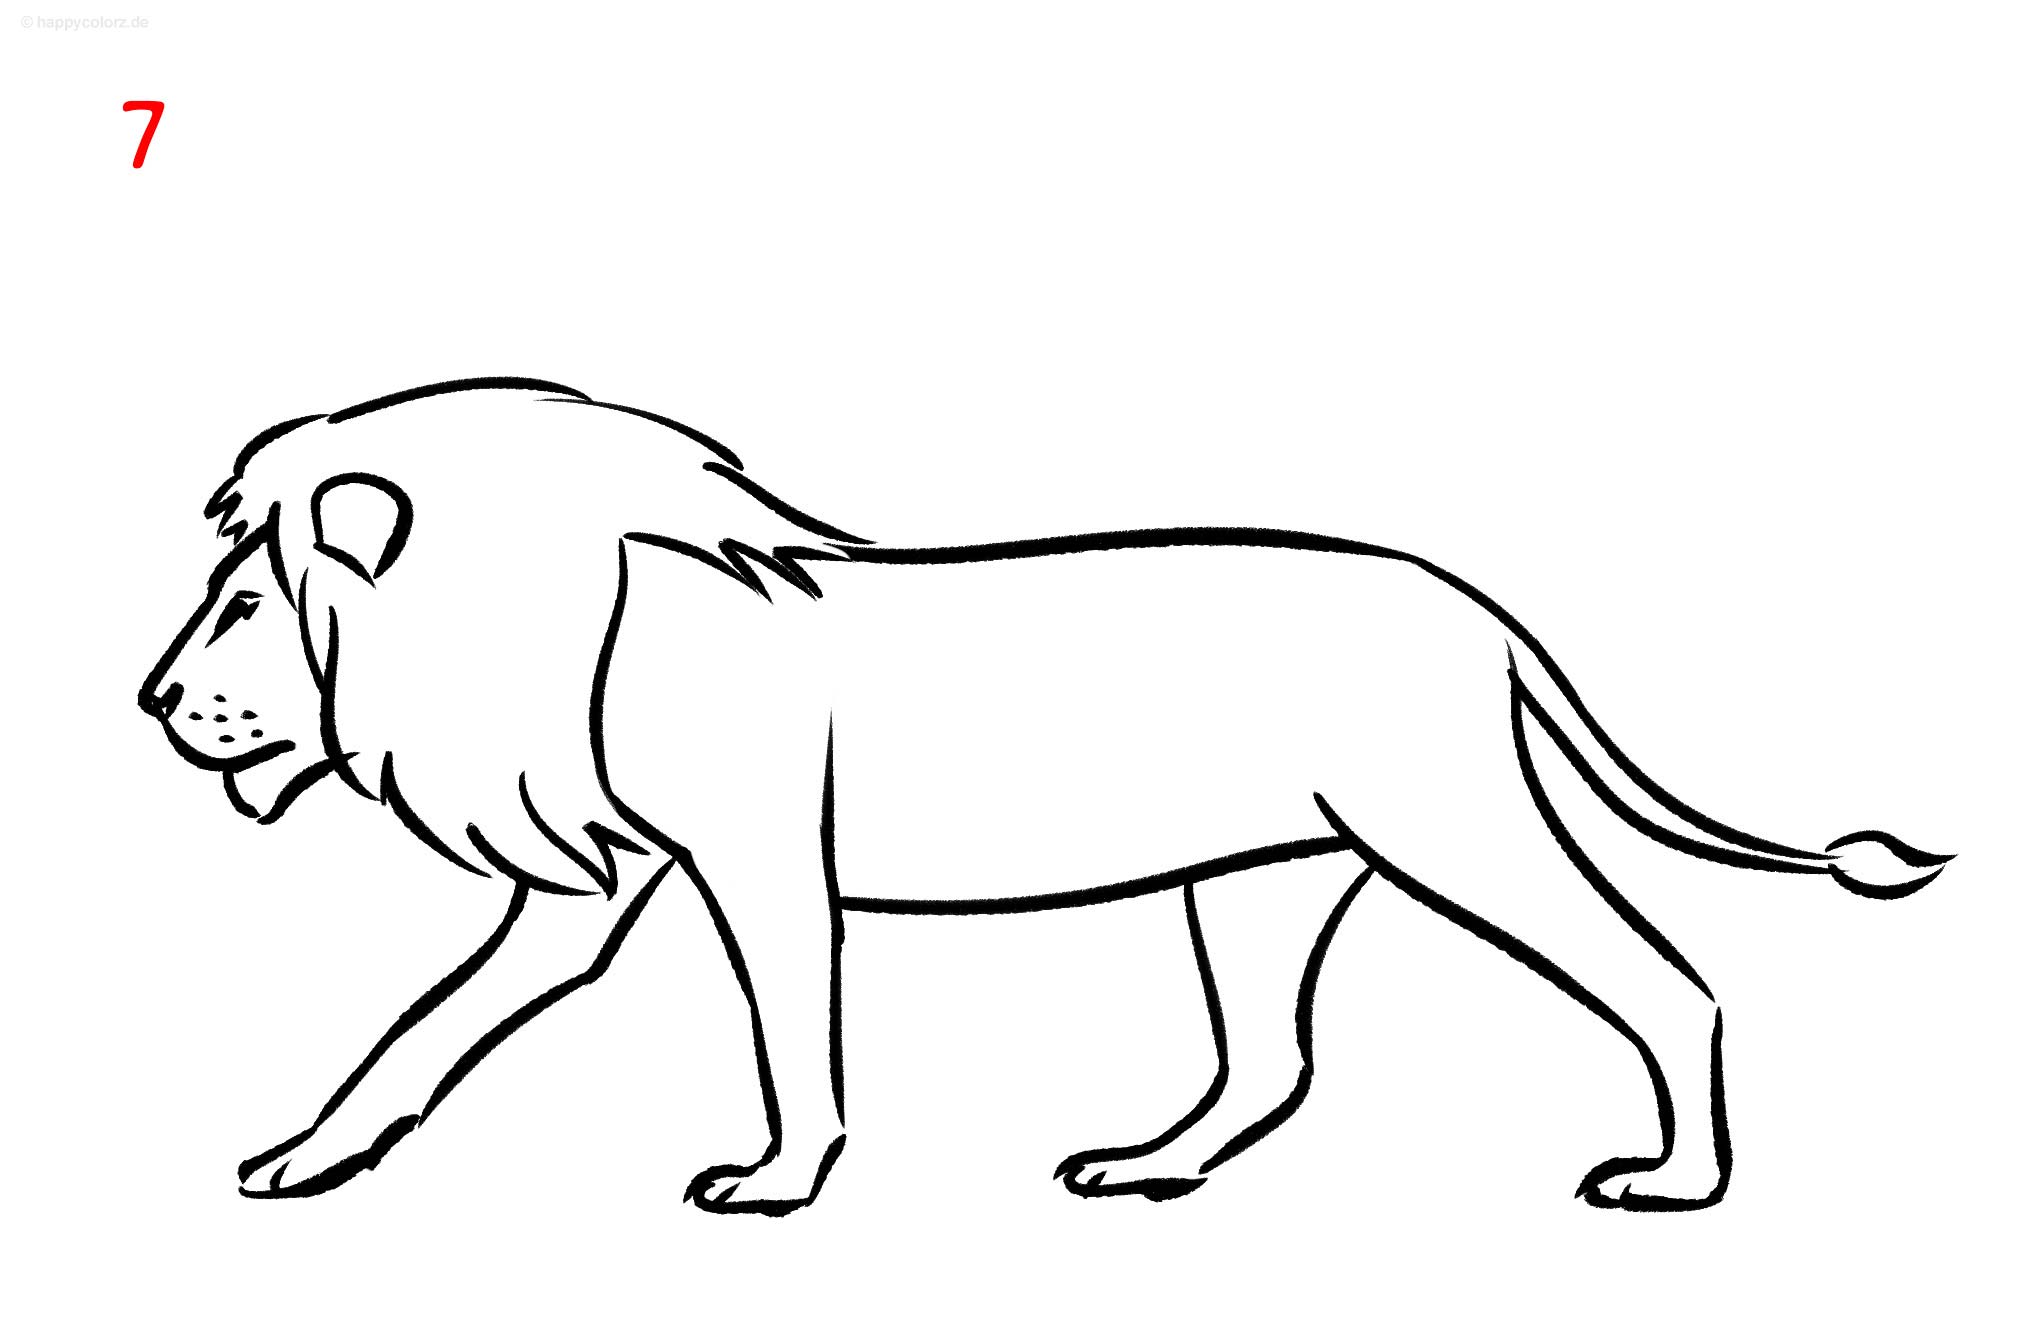 Löwe malen - Schritt für Schritt